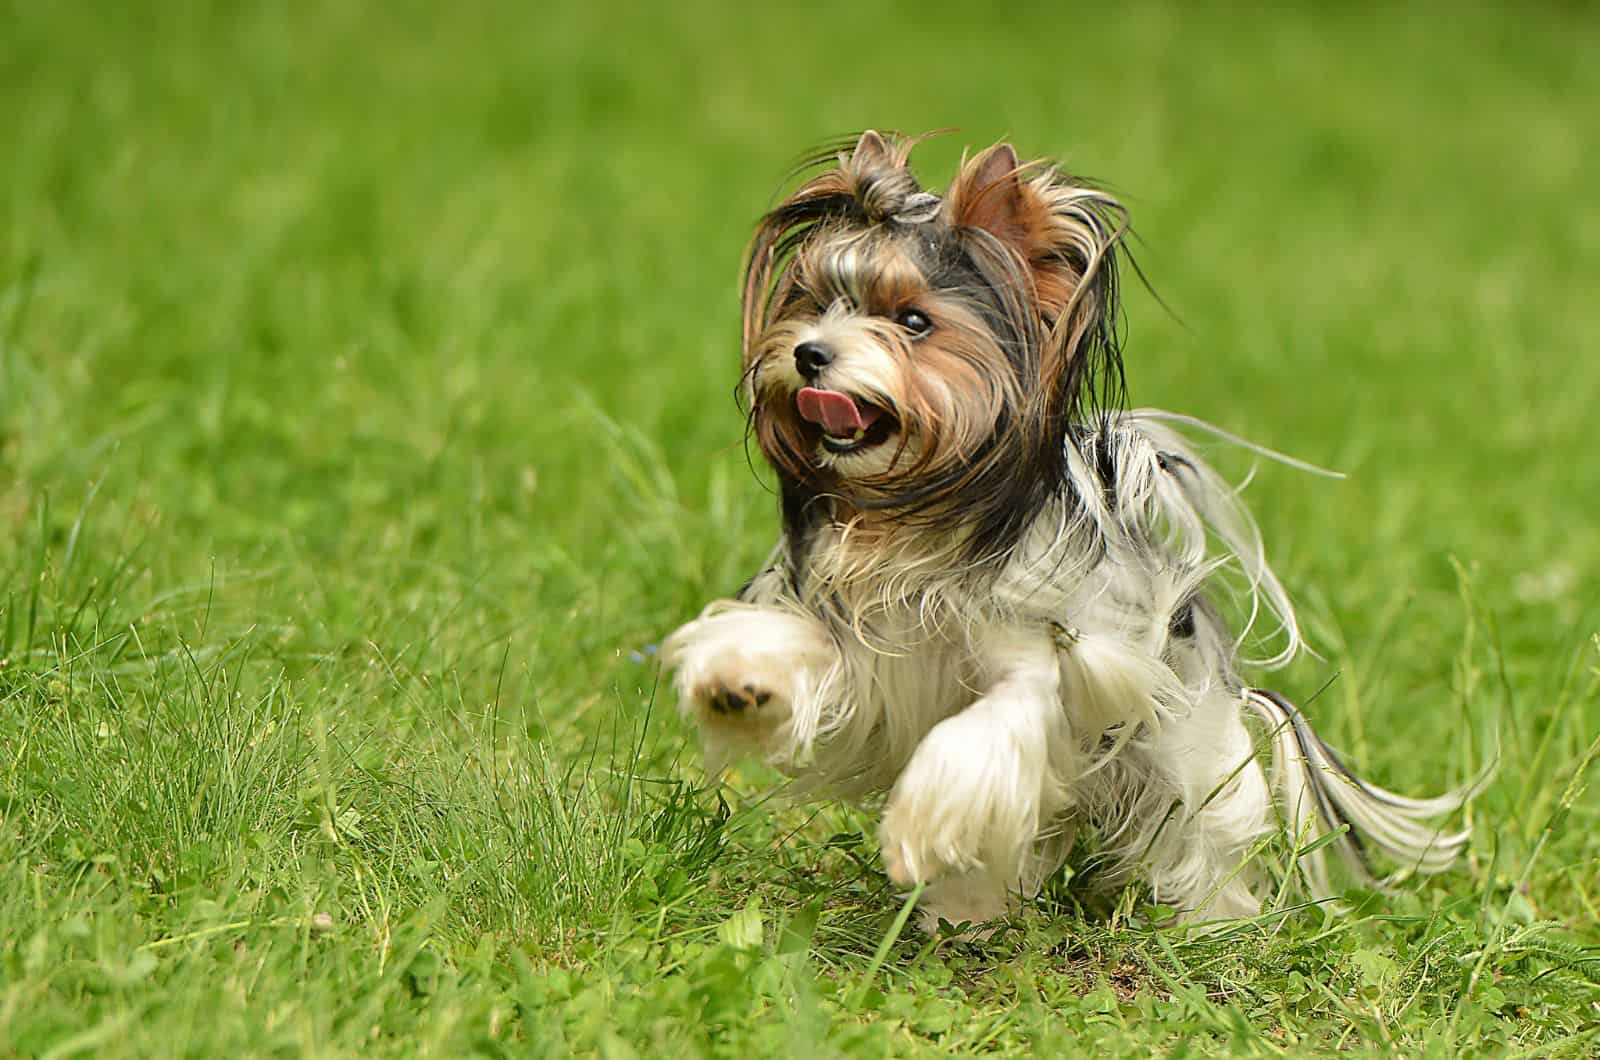 Biewer-Yorkshire terrier running in the grass